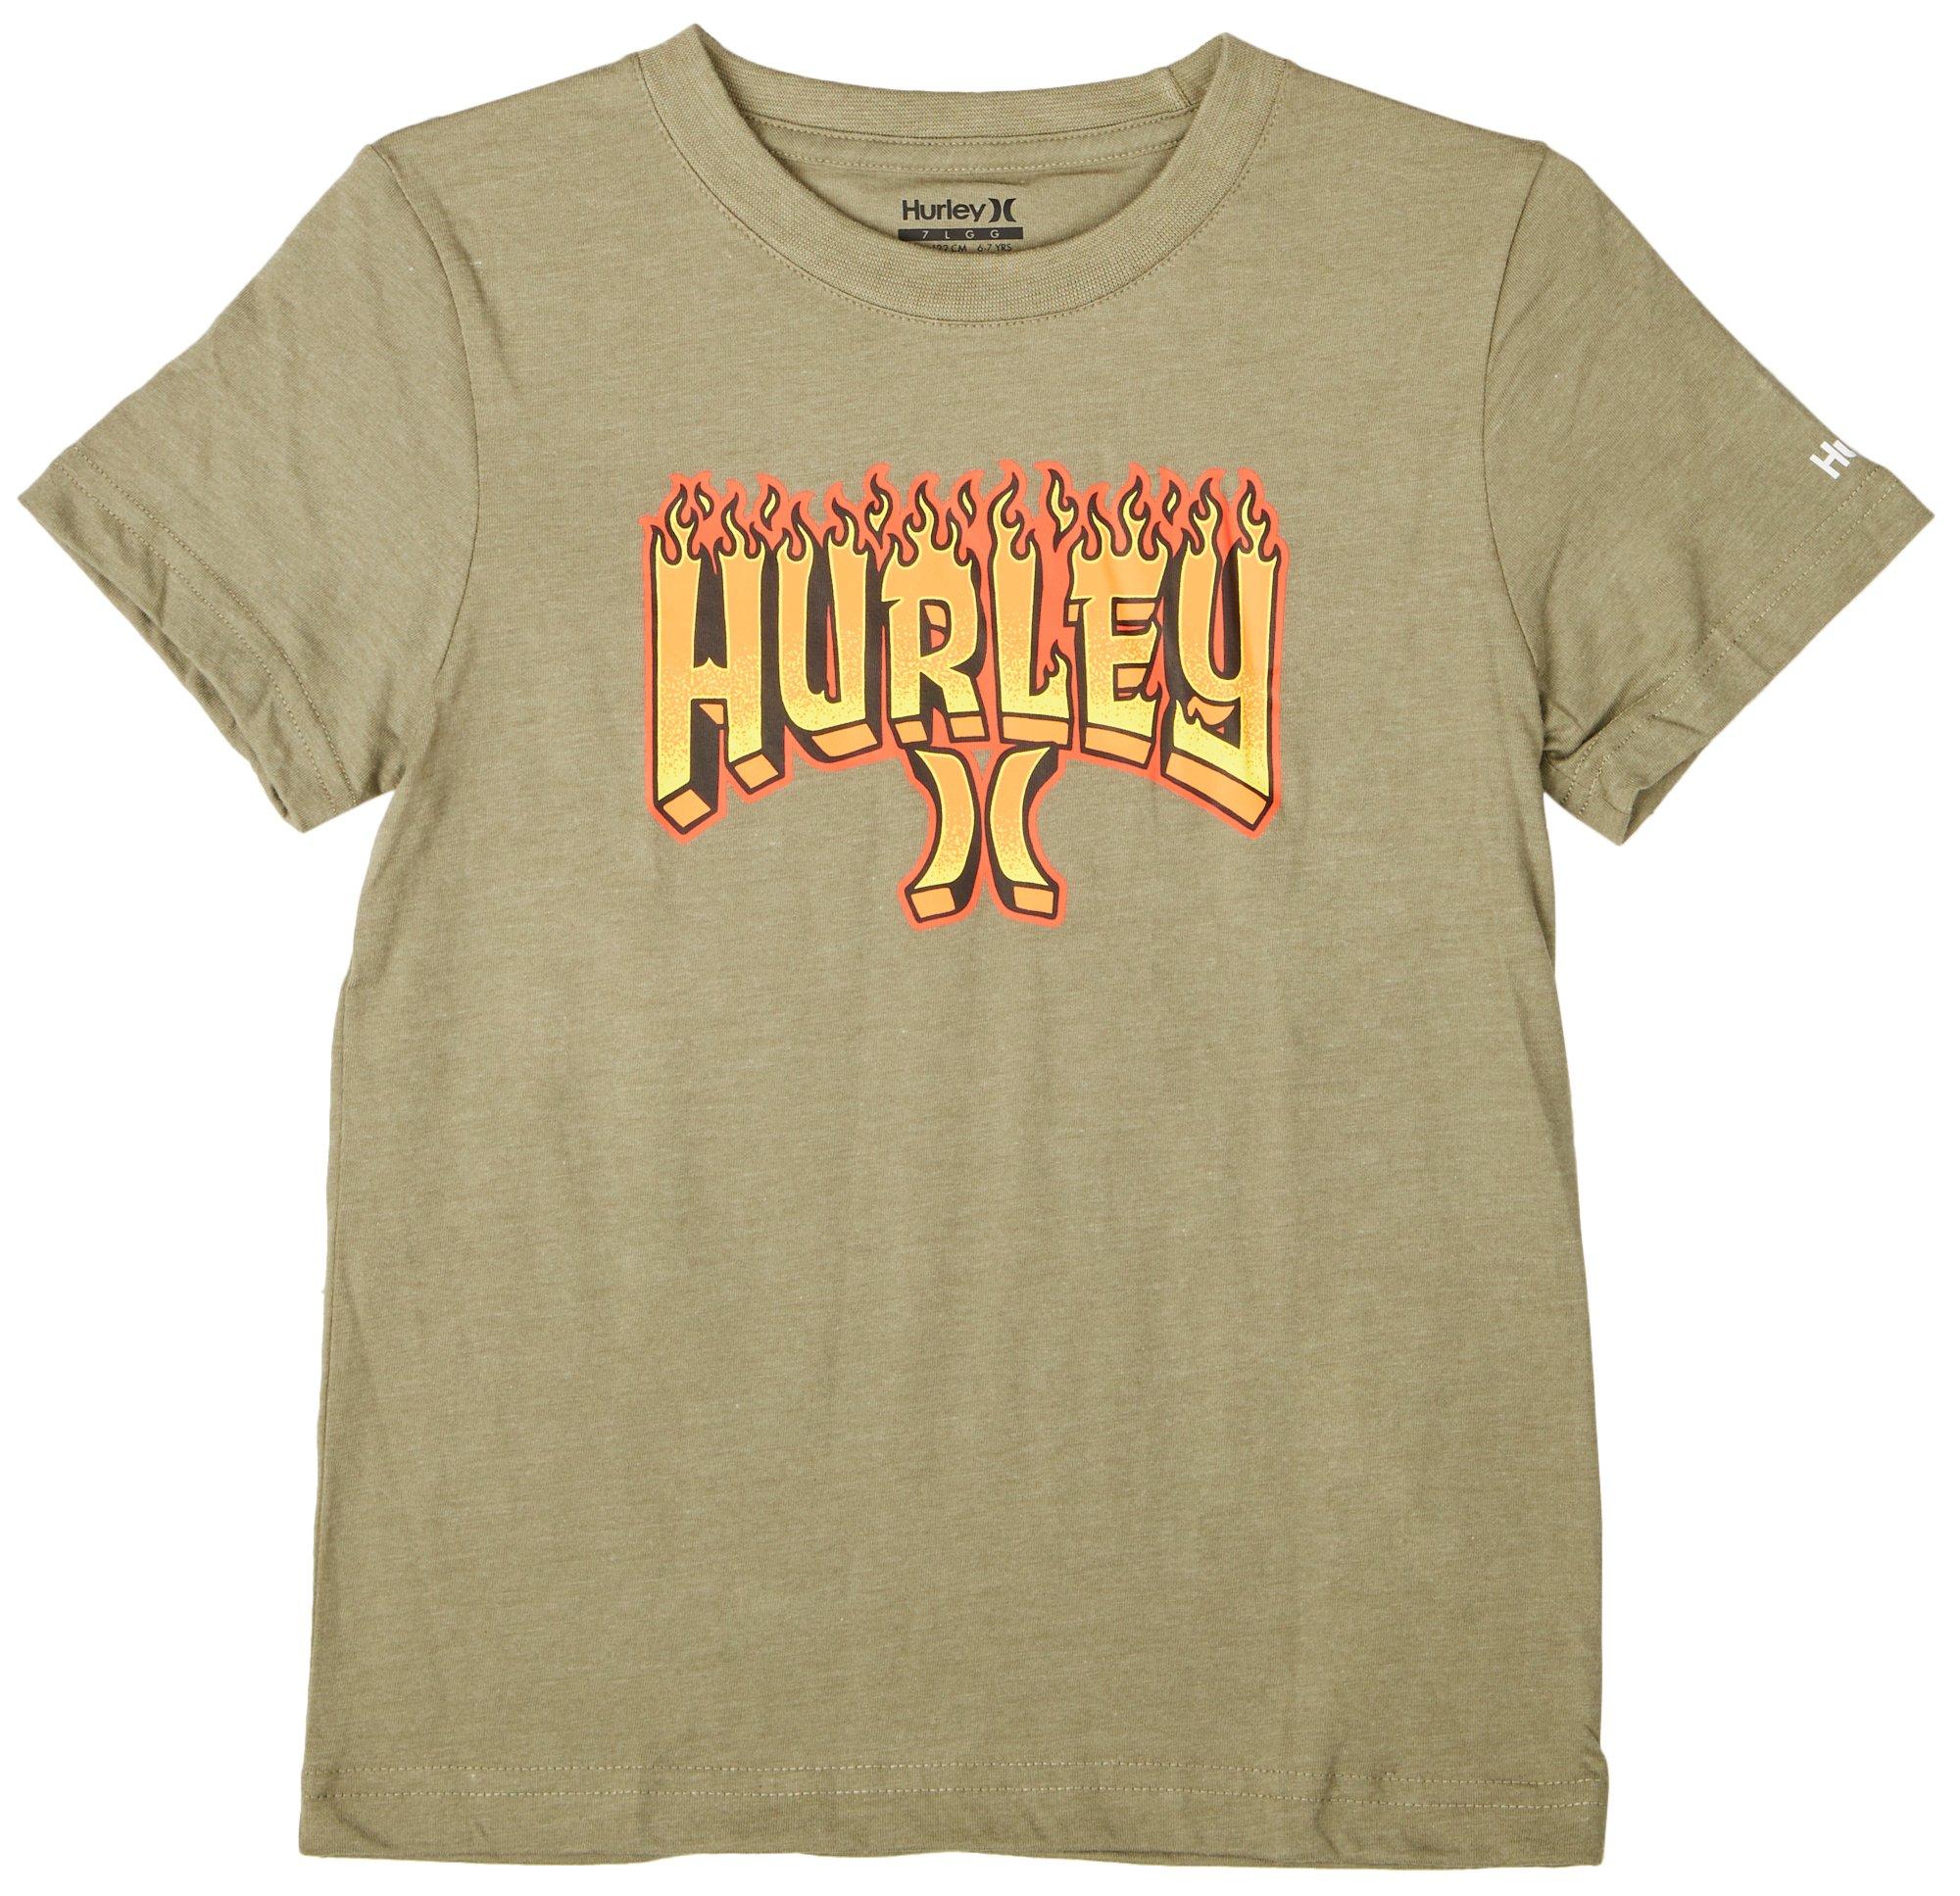 Hurley Little Boys Heater Short Sleeve Shirt